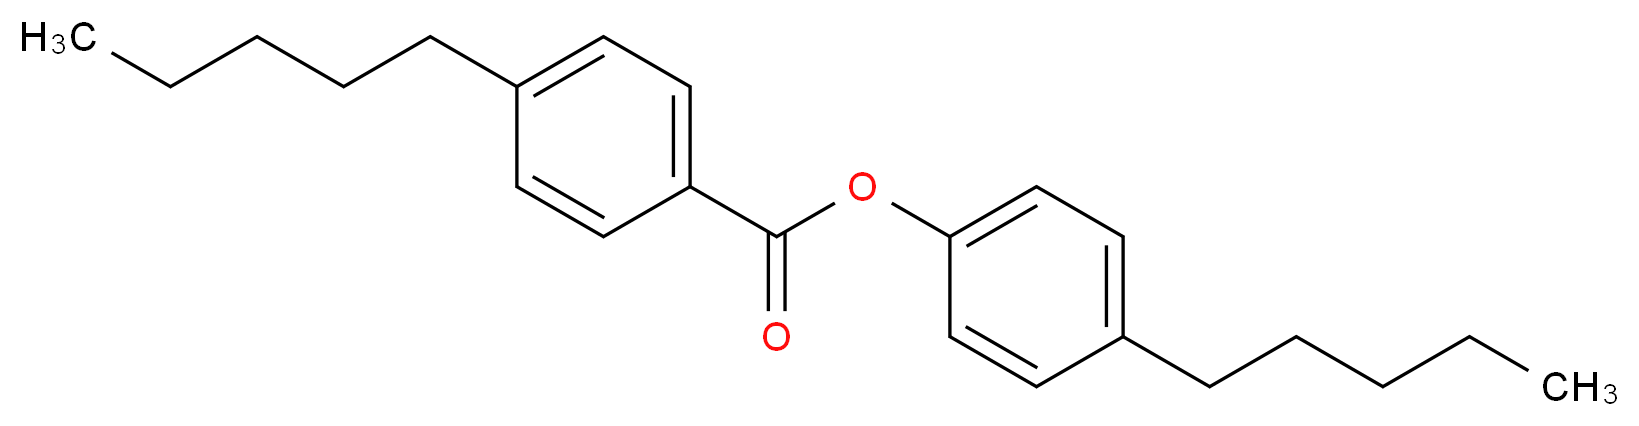 CAS_74305-48-9 molecular structure